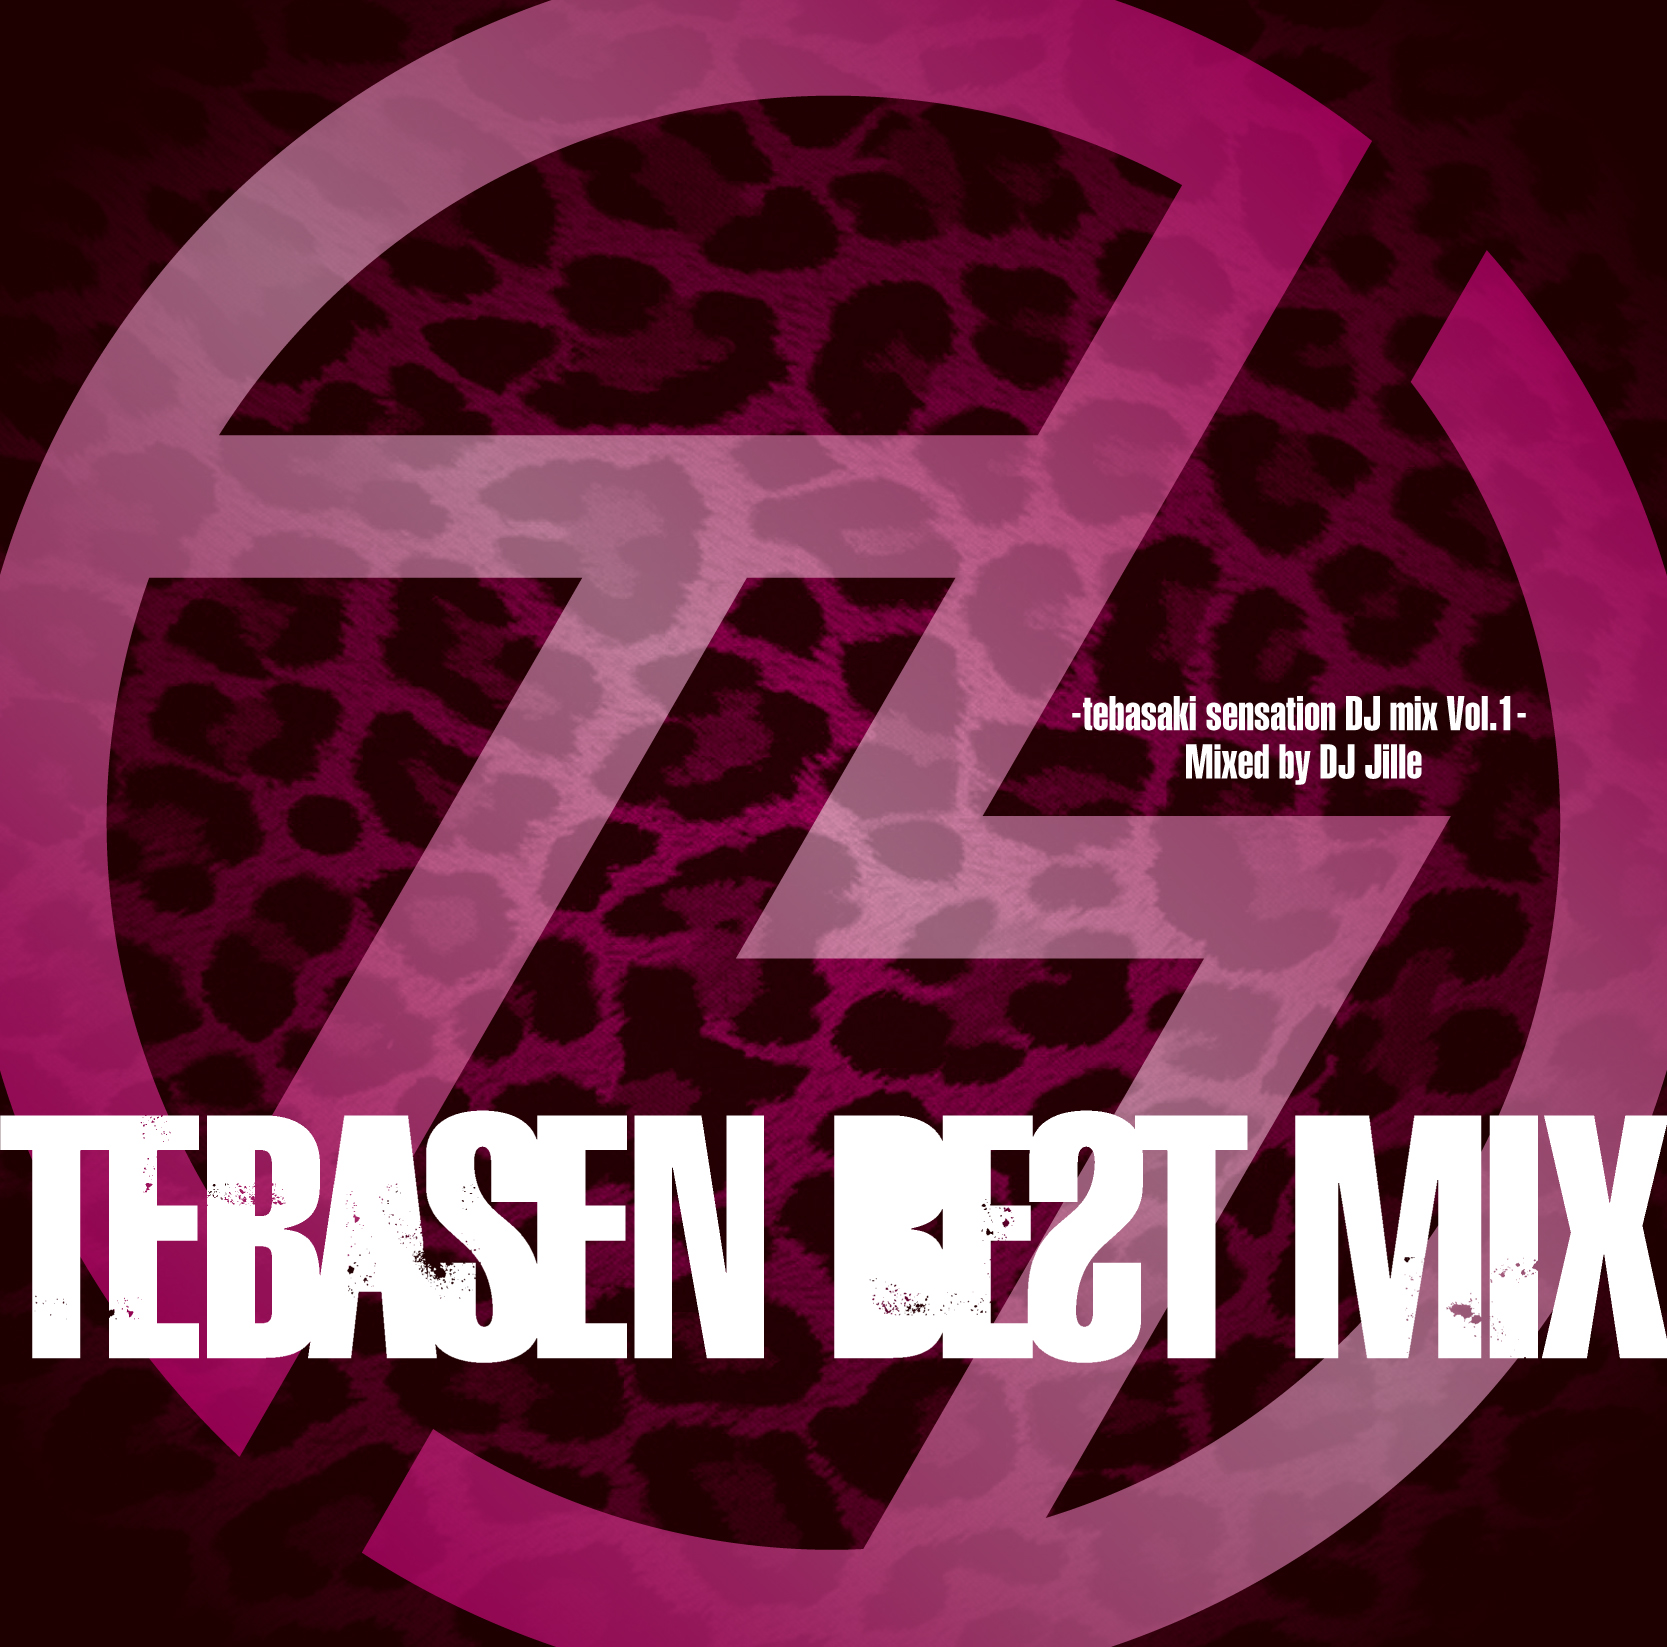 TEBASEN BEST MIX -tebasaki sensation DJ mix Vol.1- Mixed by DJ Jille